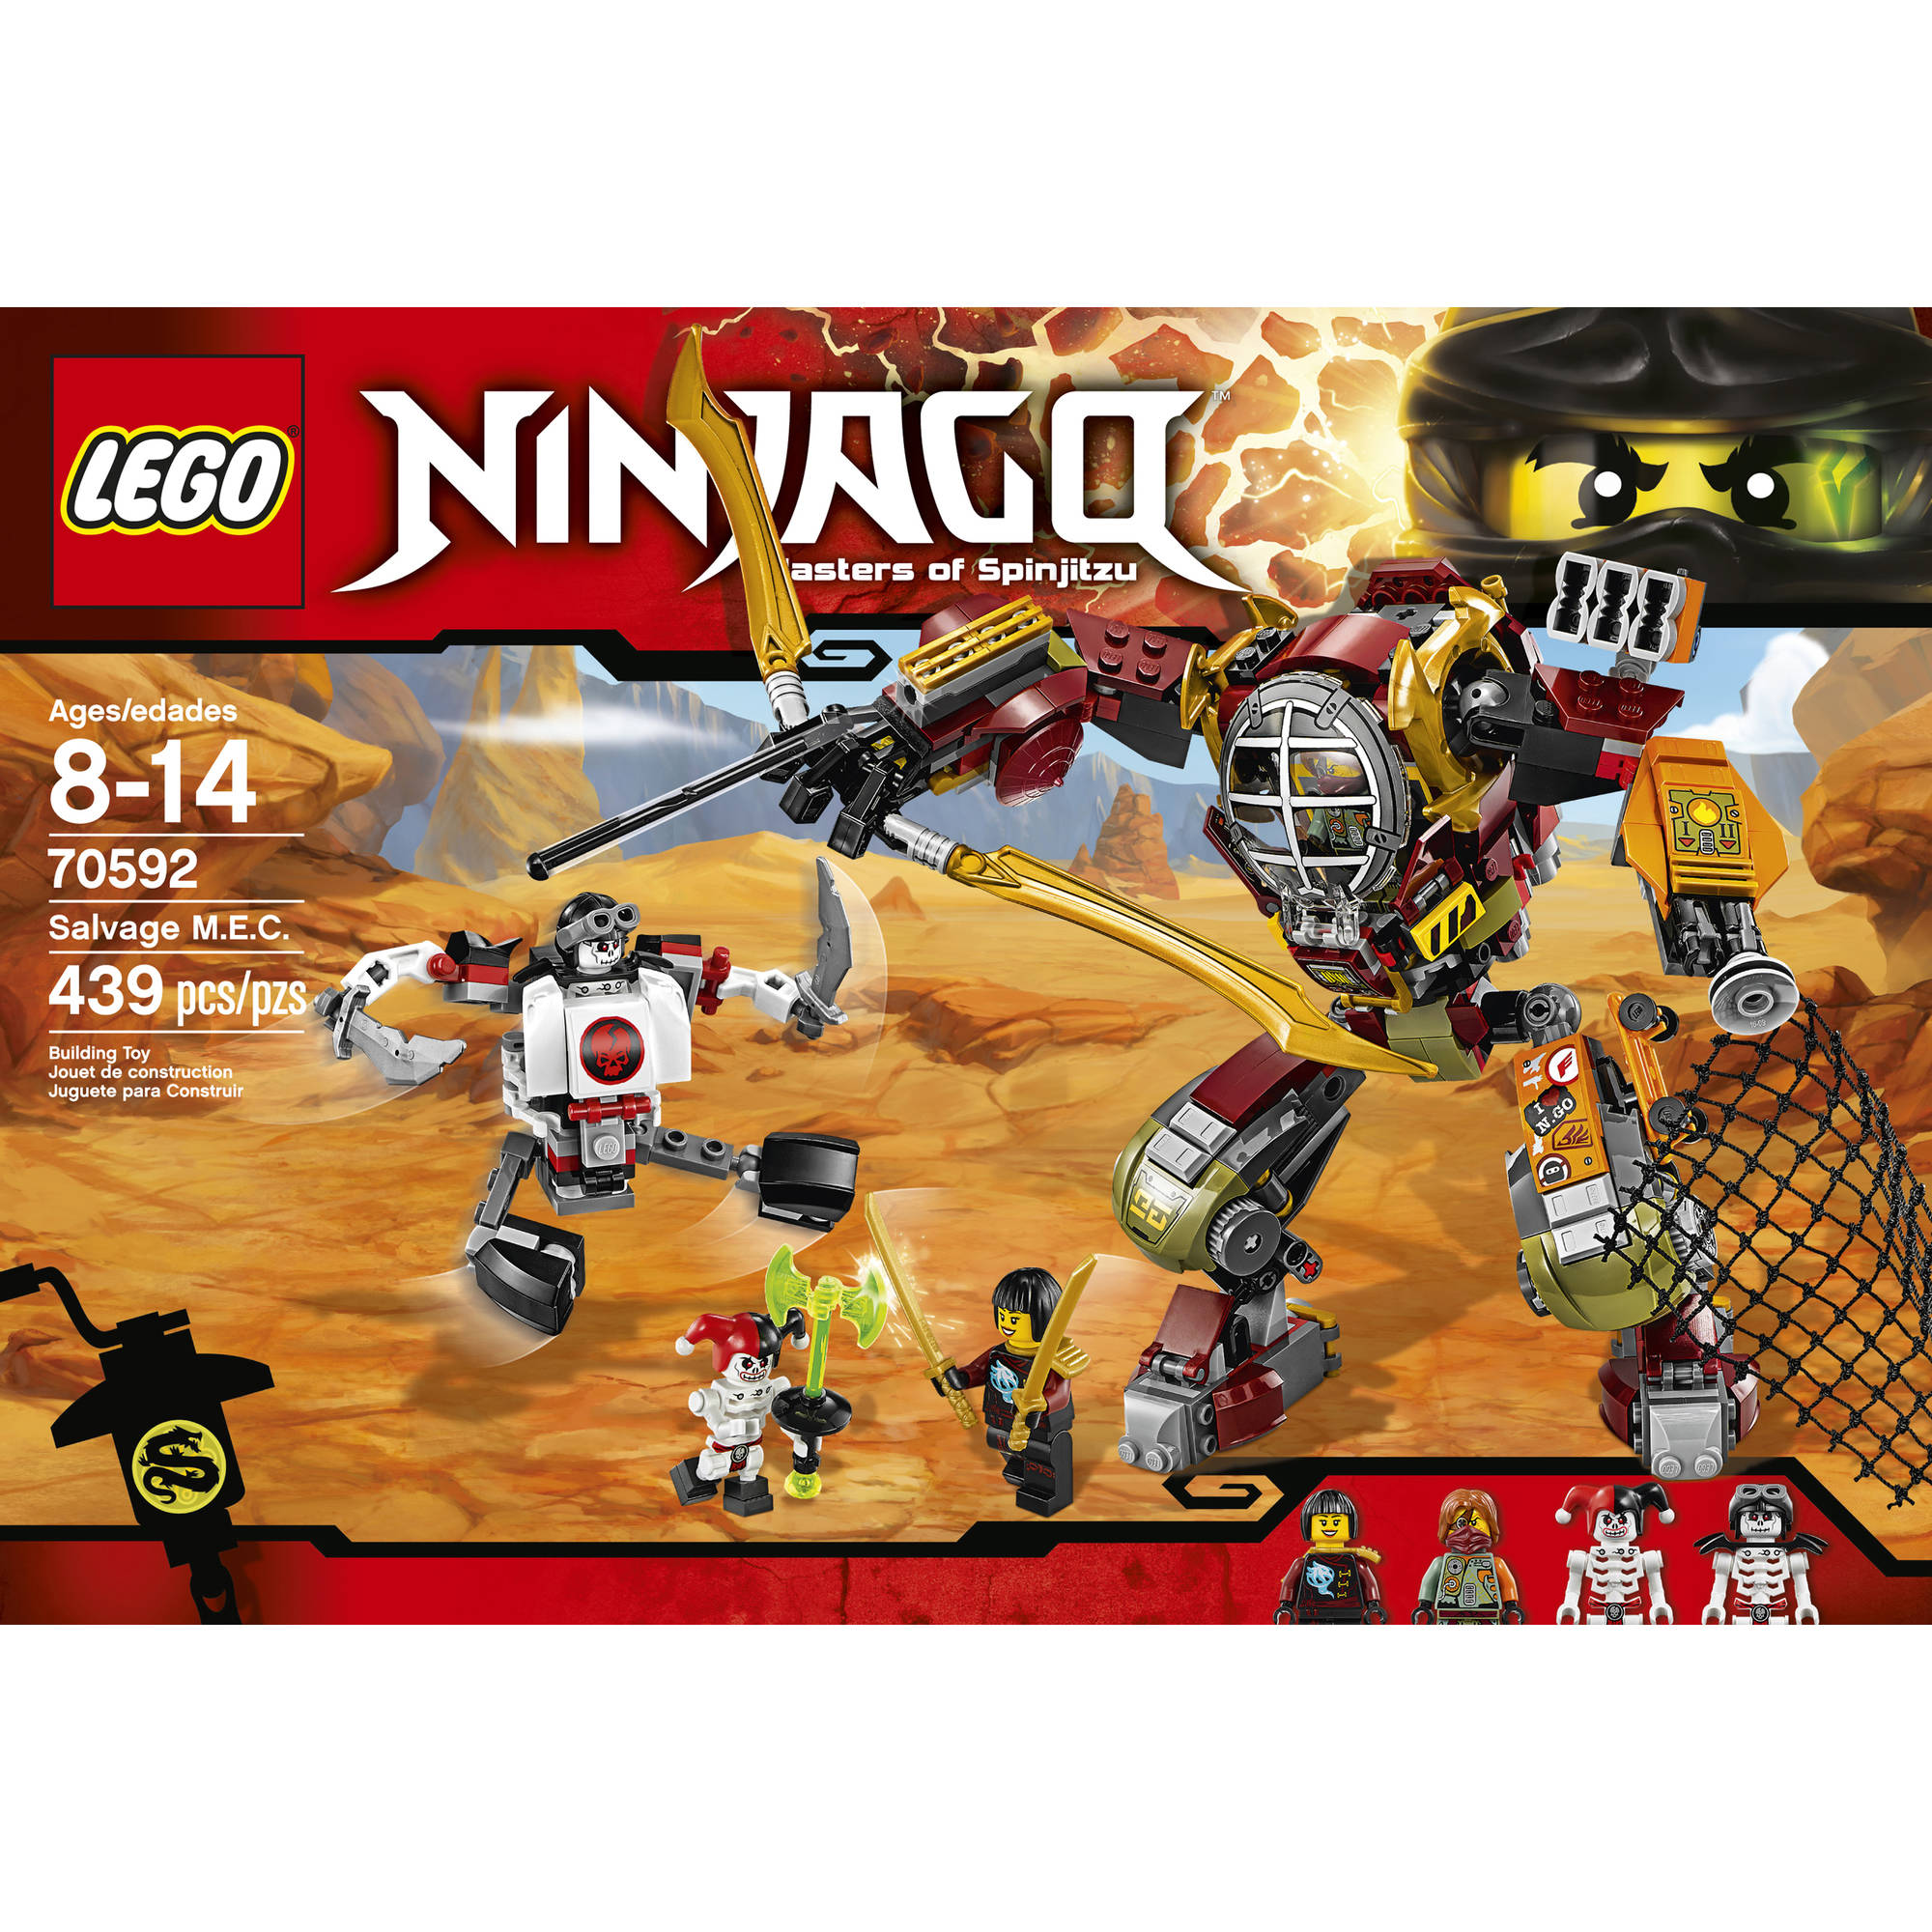 LEGO NINJAGO MASTERS OF SPINJITZU SALVAGE M.E.C. 439 PCS | eBay2000 x 2000